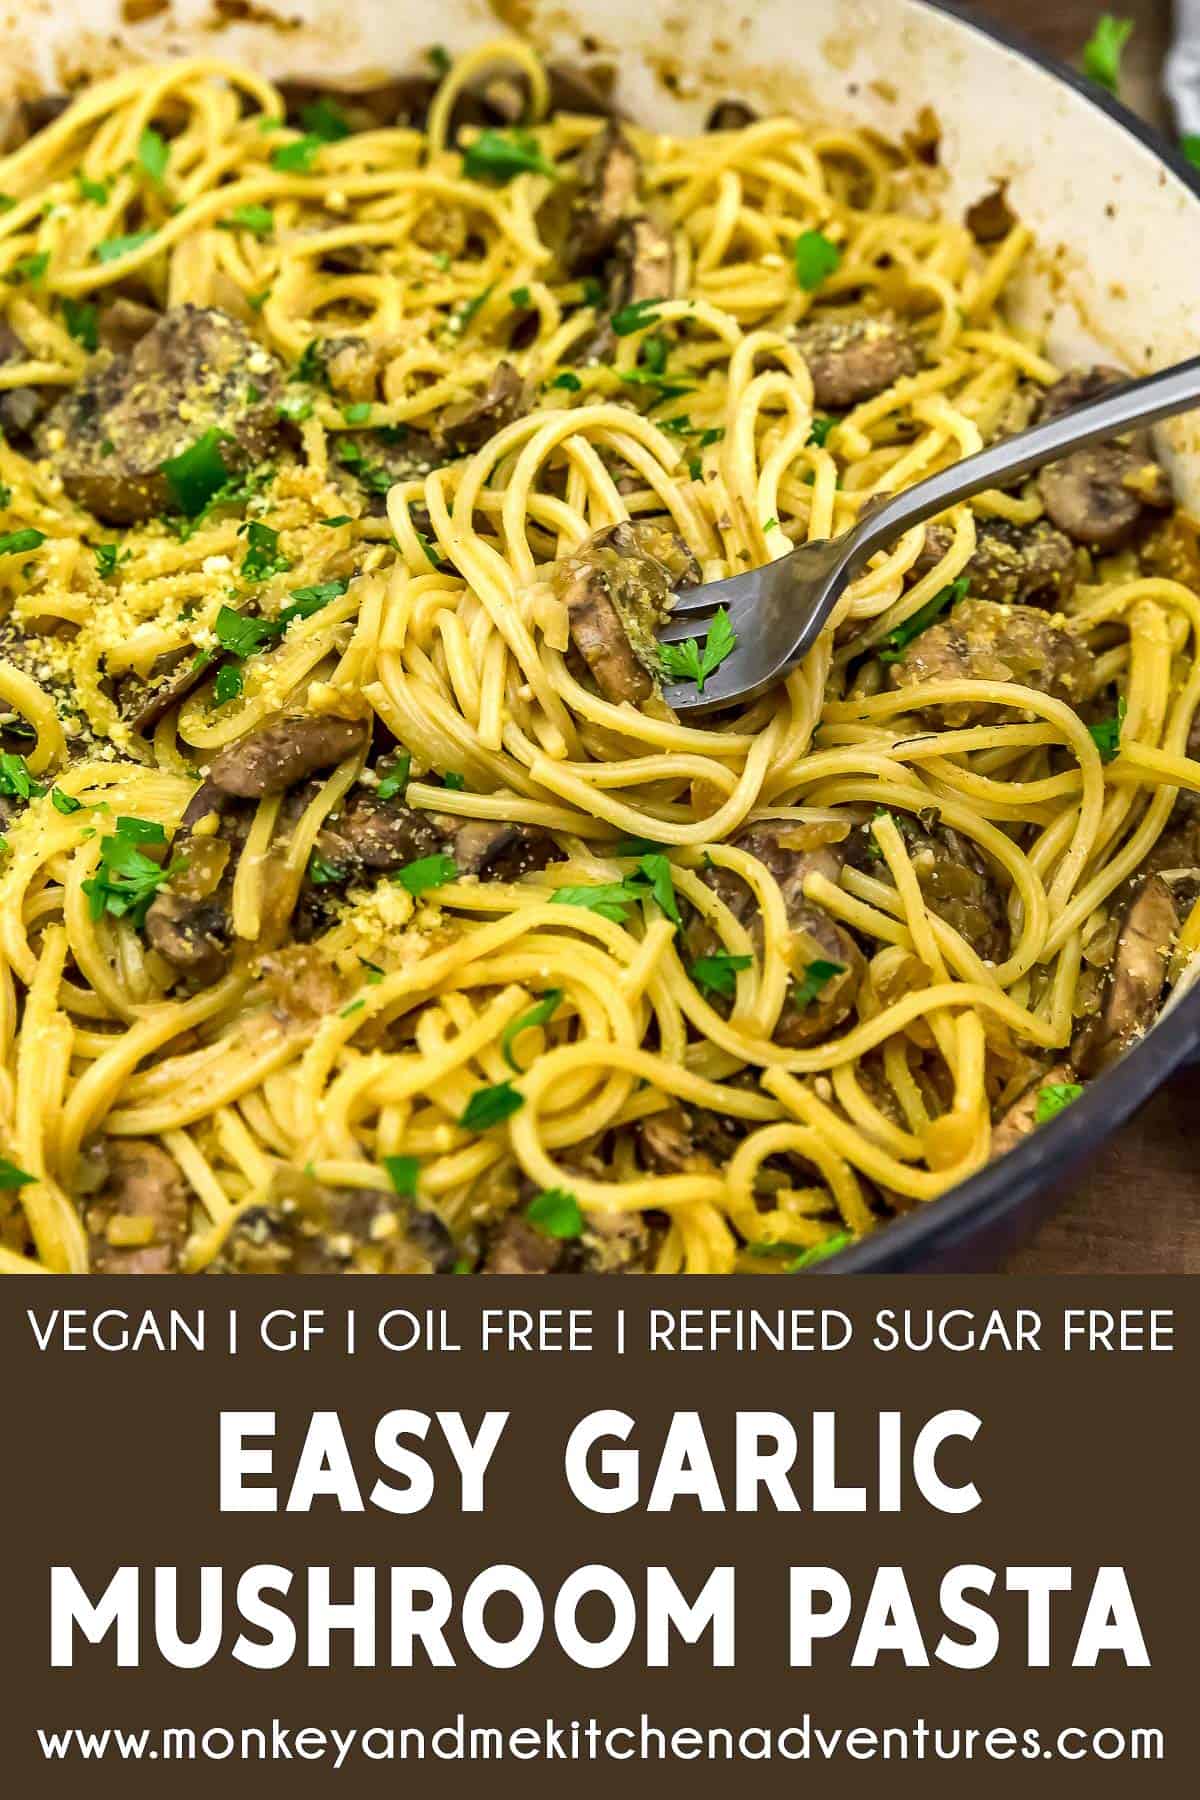 Easy Garlic Mushroom Pasta with descriptive text